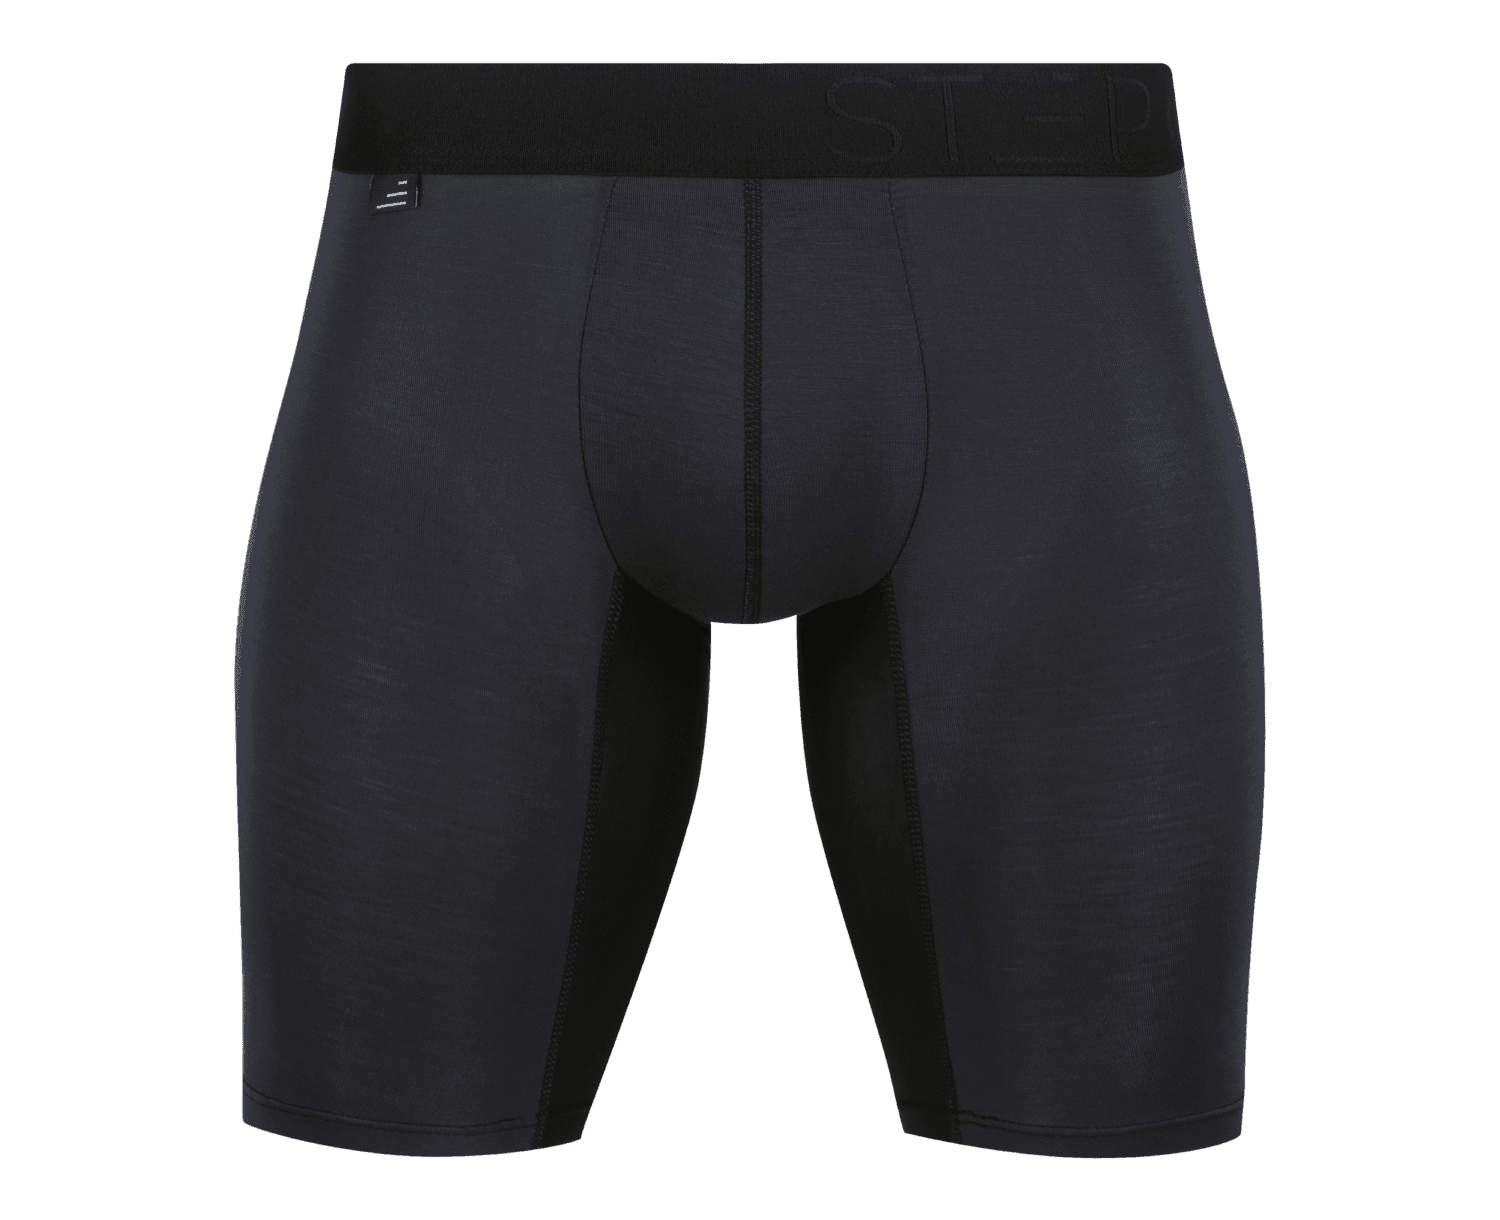 Trunk - Smashed Avo  Step One Men's Underwear UK